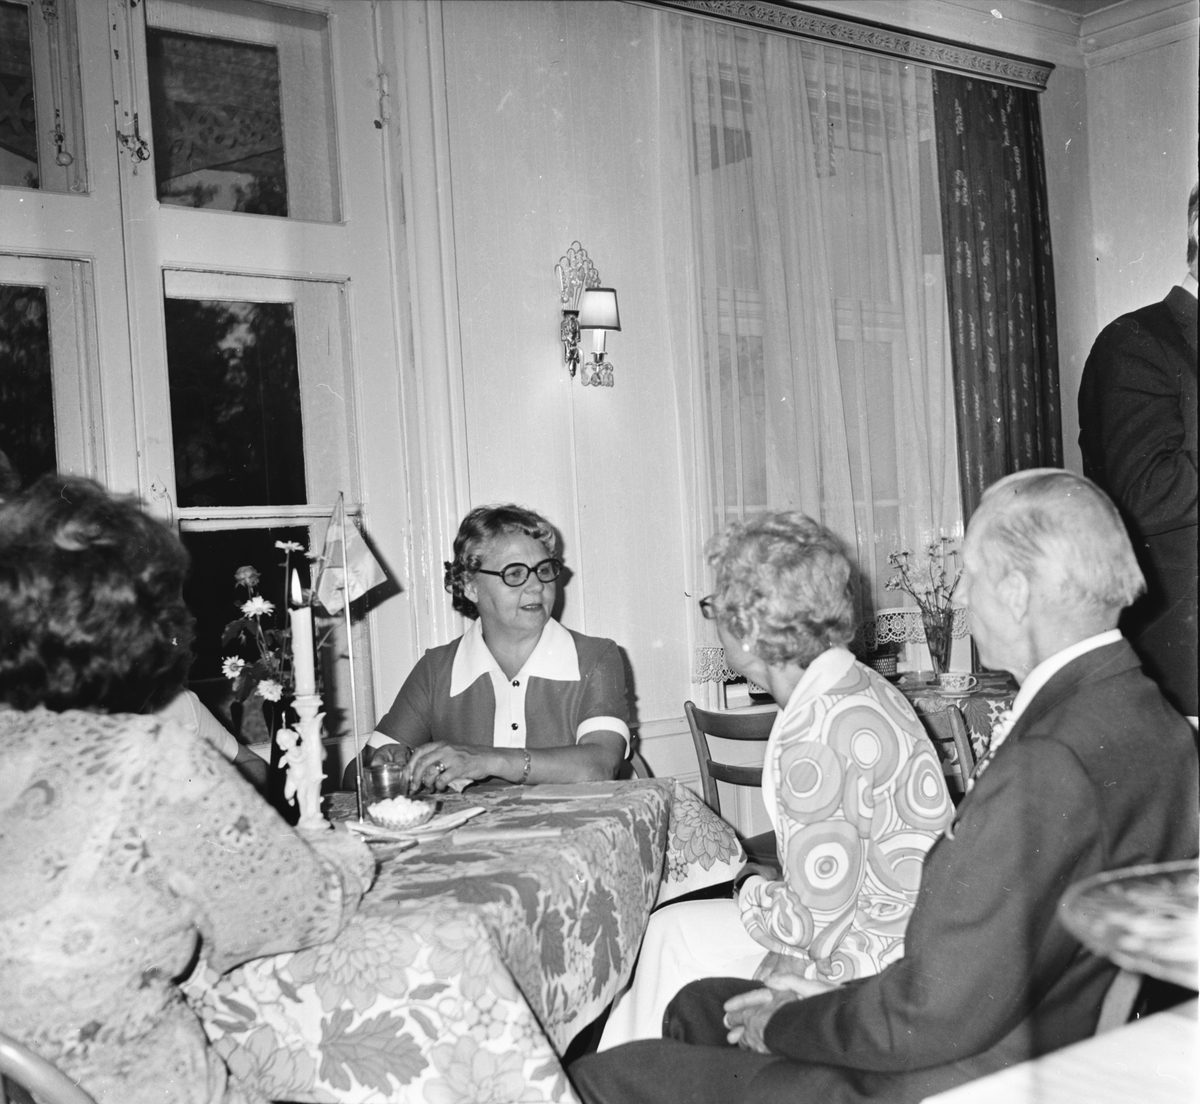 Amerikagäster på fest i Voxna herrgård.
5/8-1973